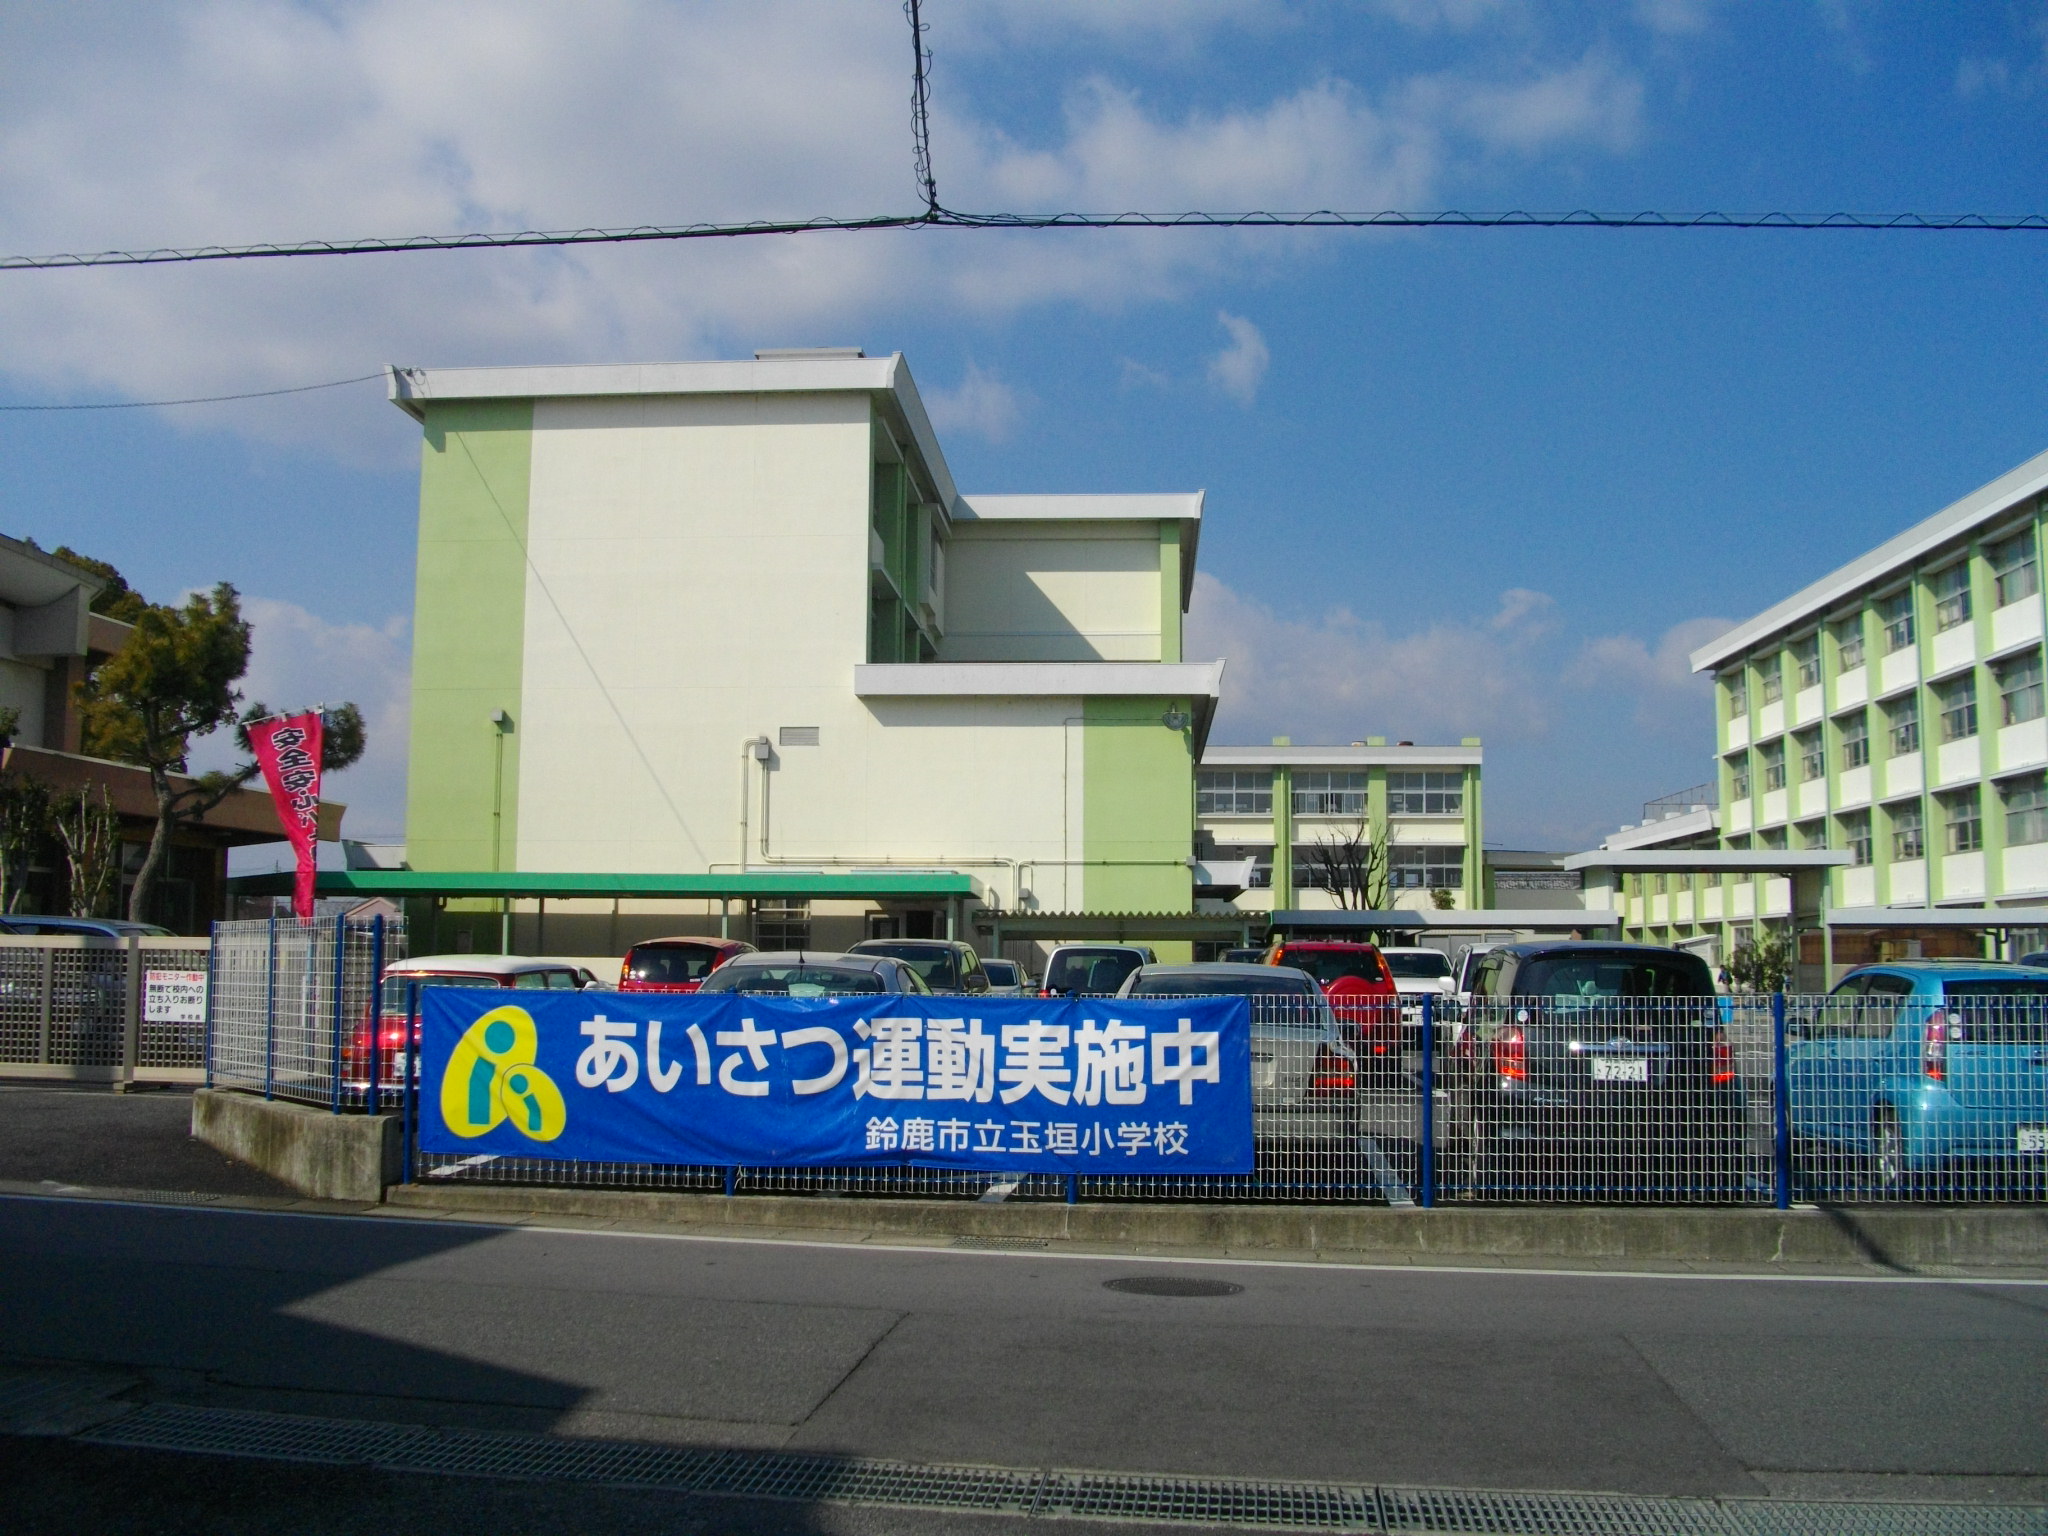 Primary school. 2238m to Suzuka Municipal Tamagaki elementary school (elementary school)